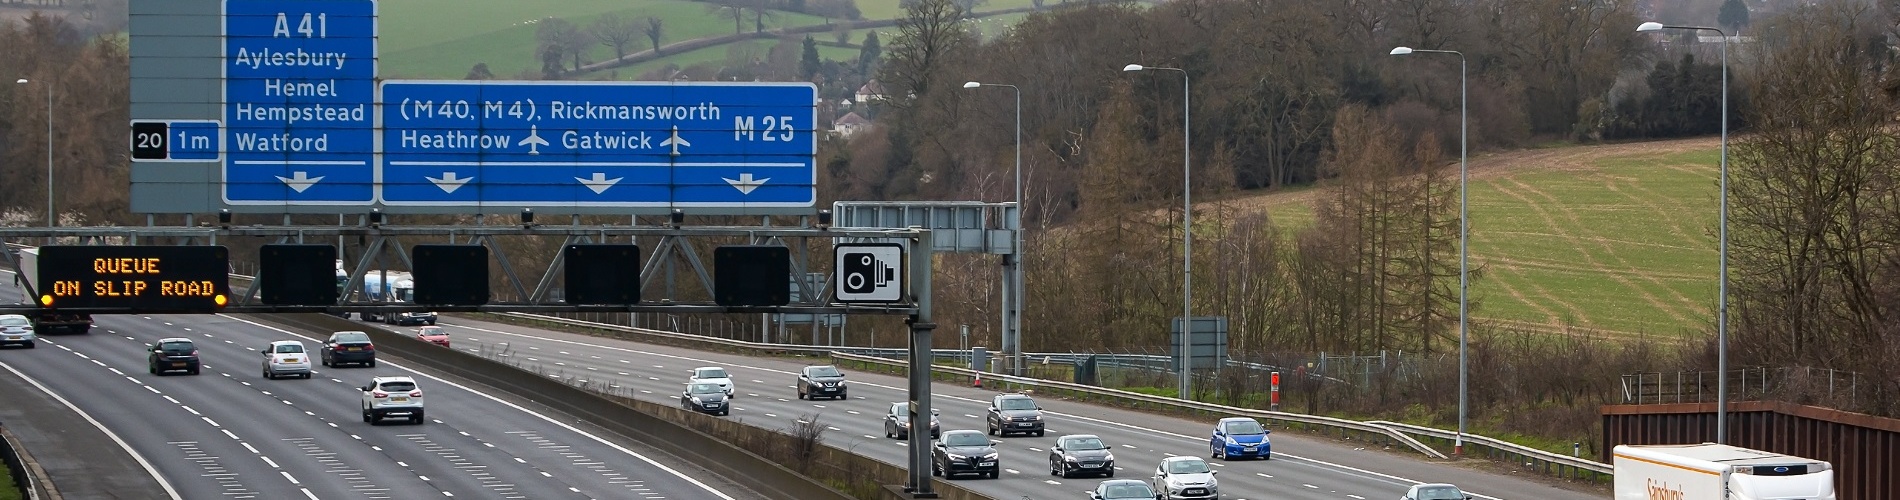 M1 smart motorway